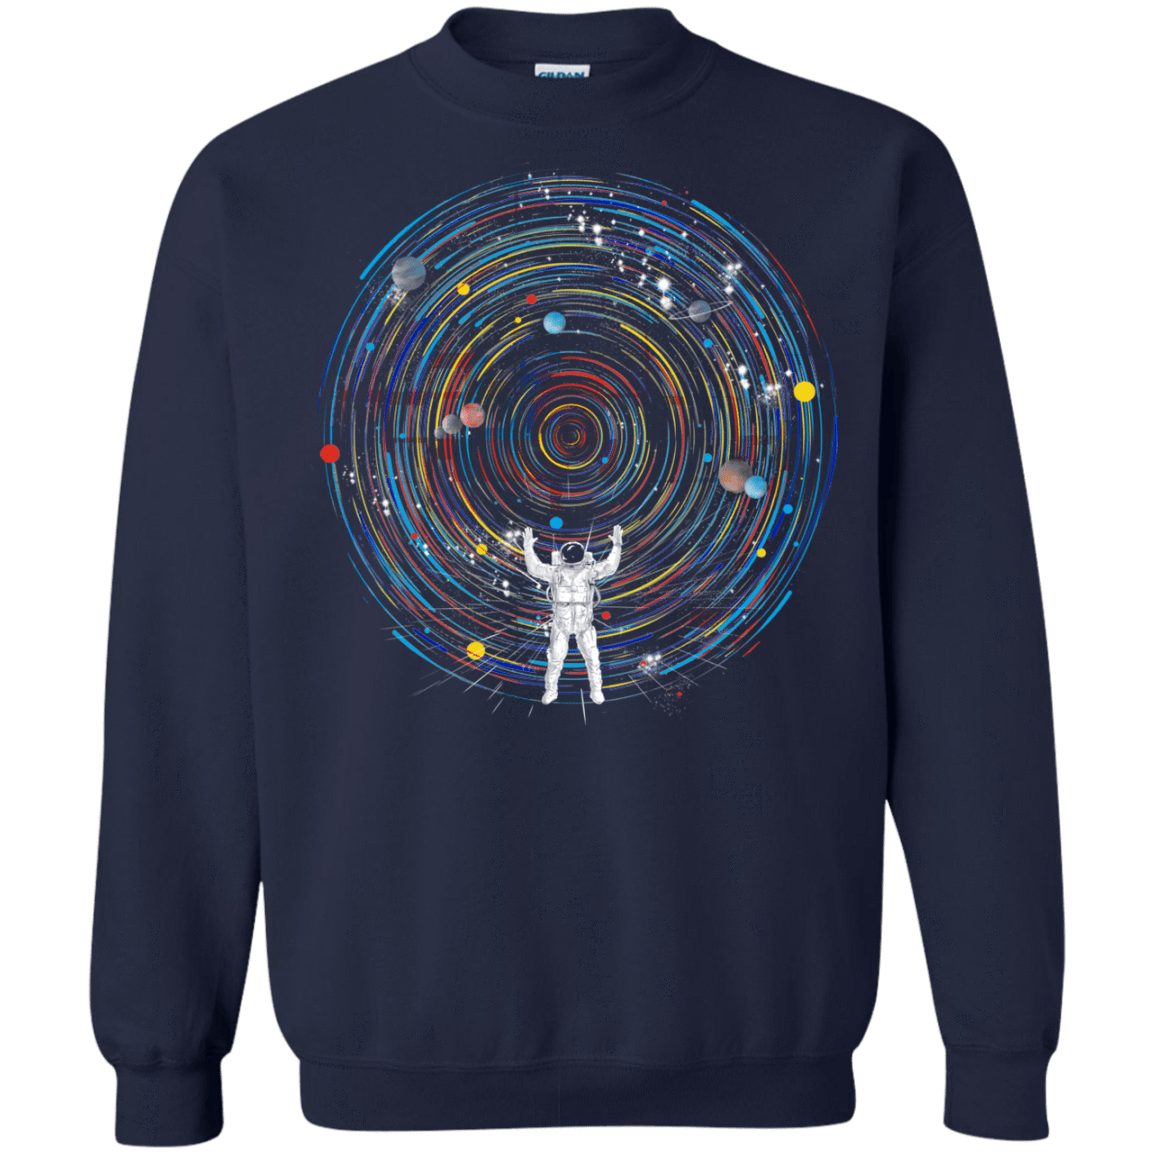 Sweatshirts Navy / S Space DJ Crewneck Sweatshirt